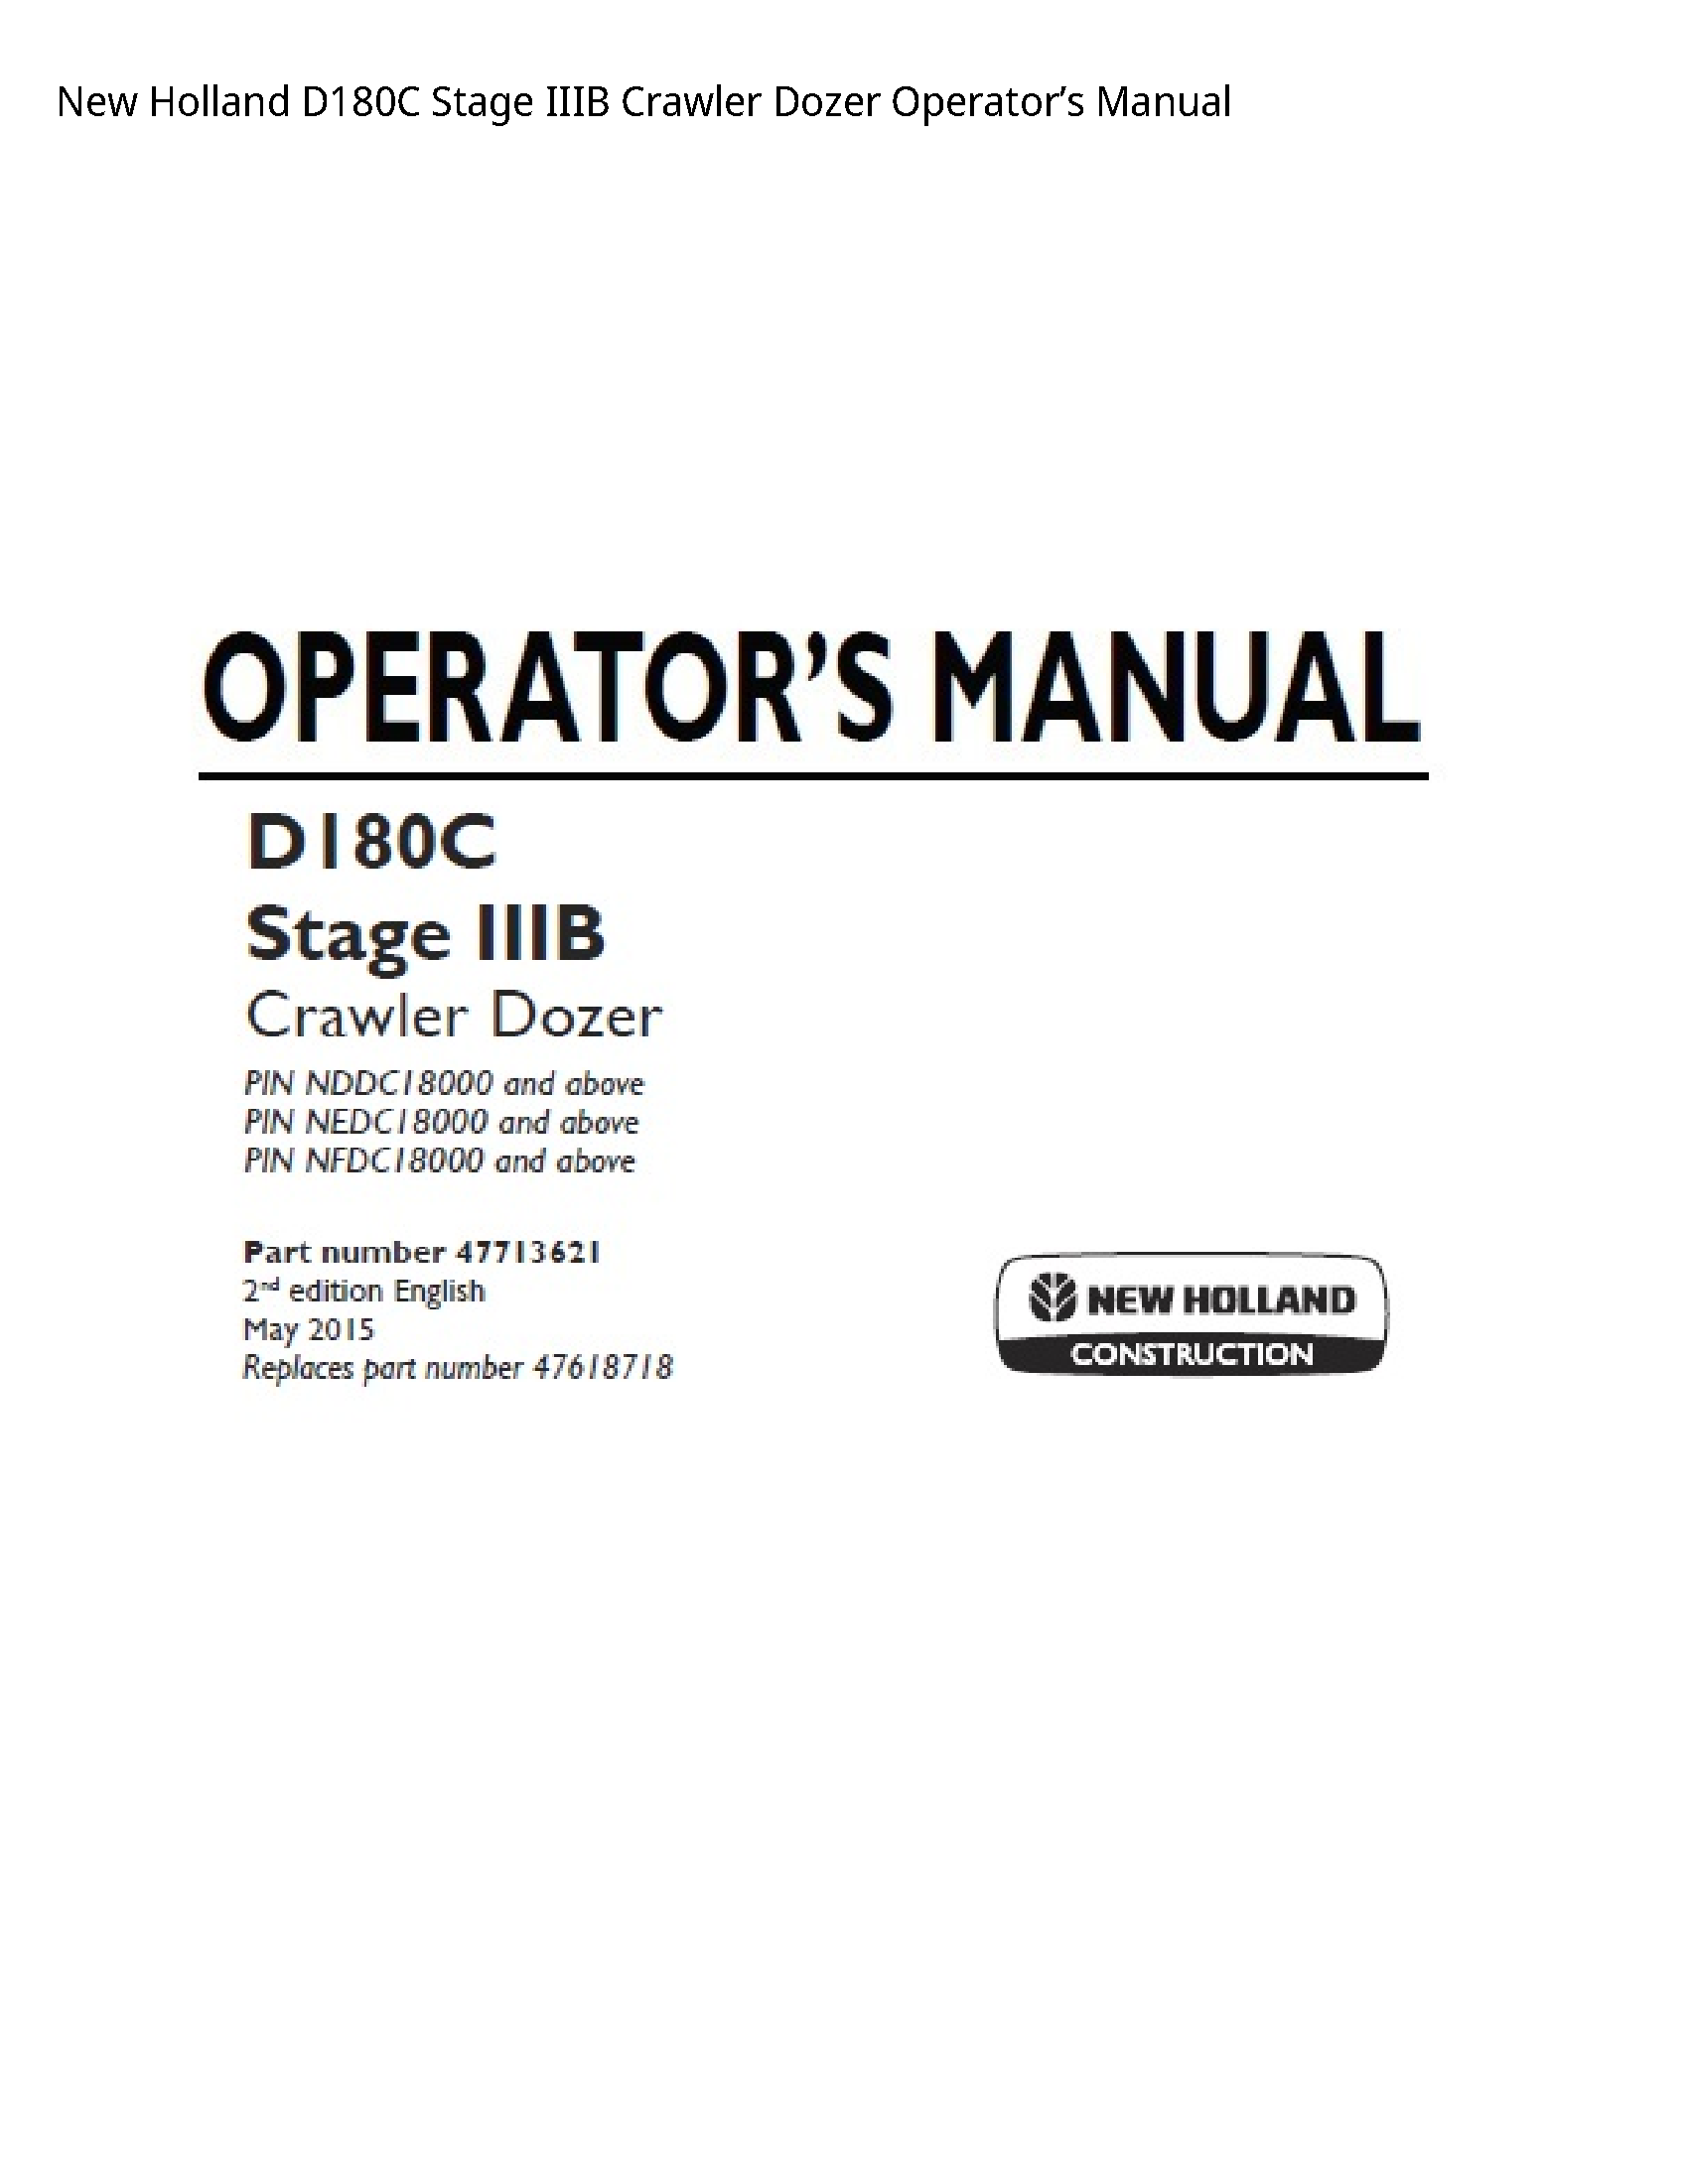 New Holland D180C Stage IIIB Crawler Dozer Operator’s manual